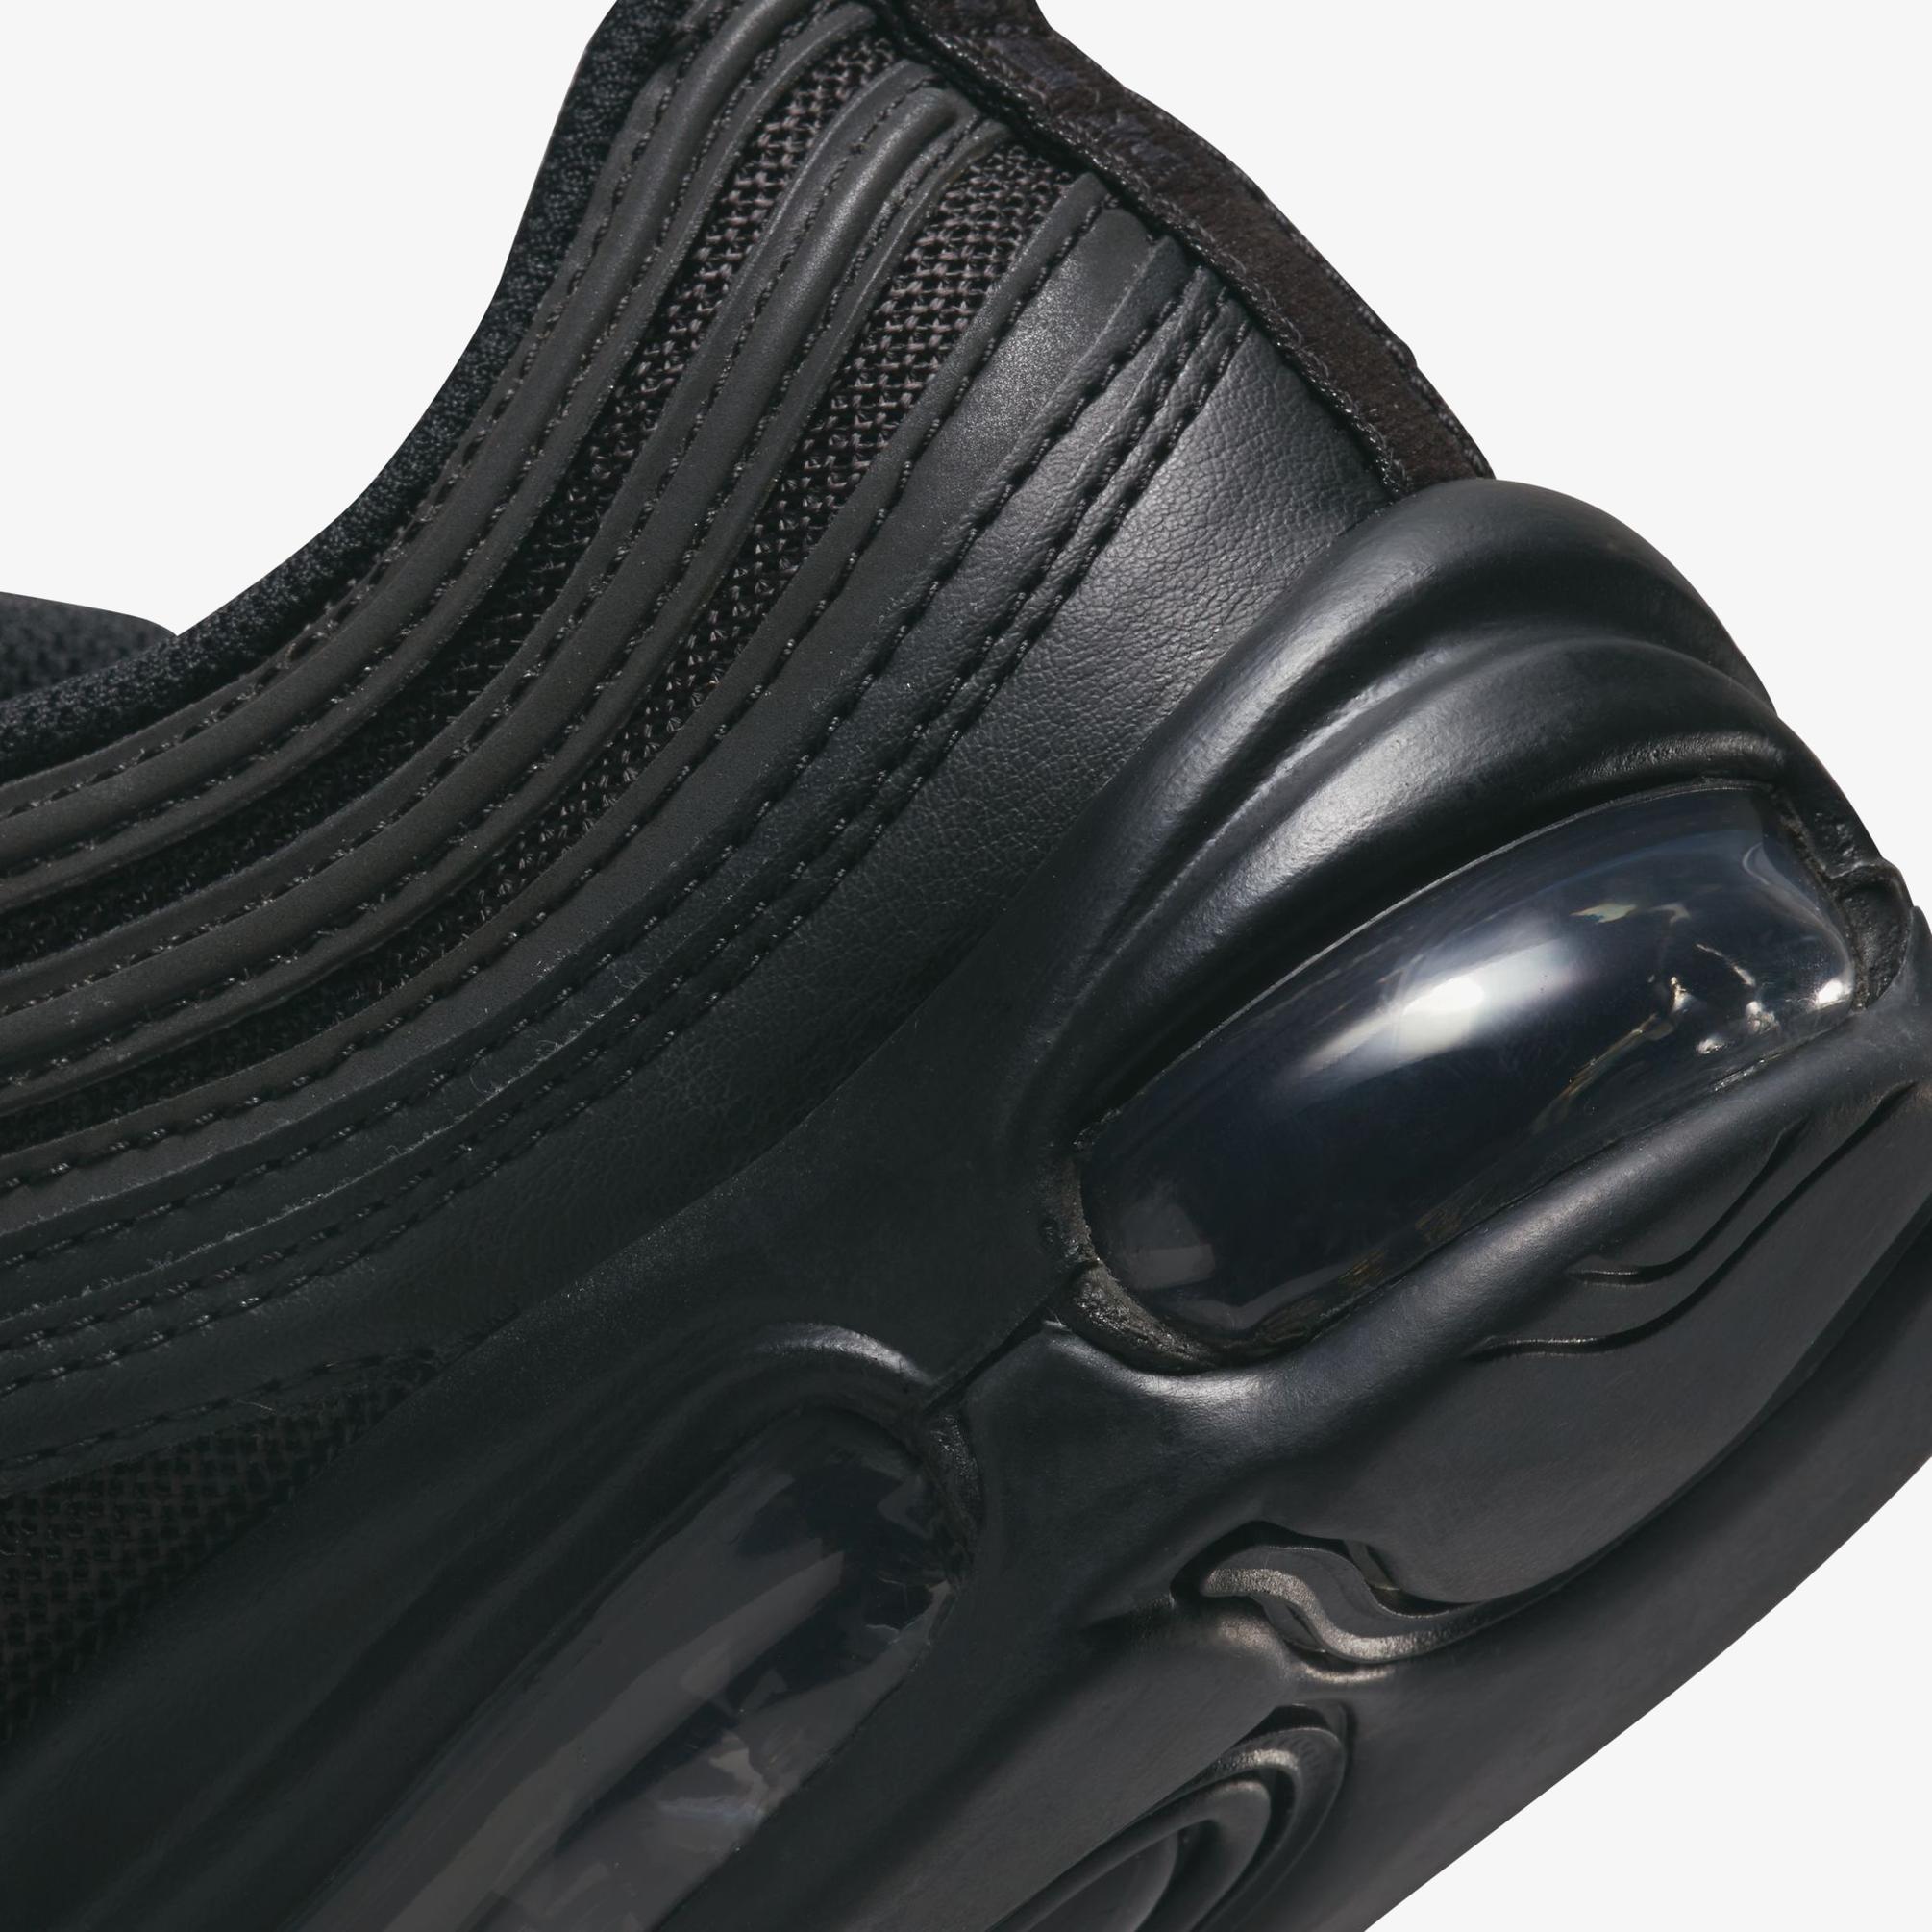  Nike Air Max 97 Kadın Siyah Spor Ayakkabı